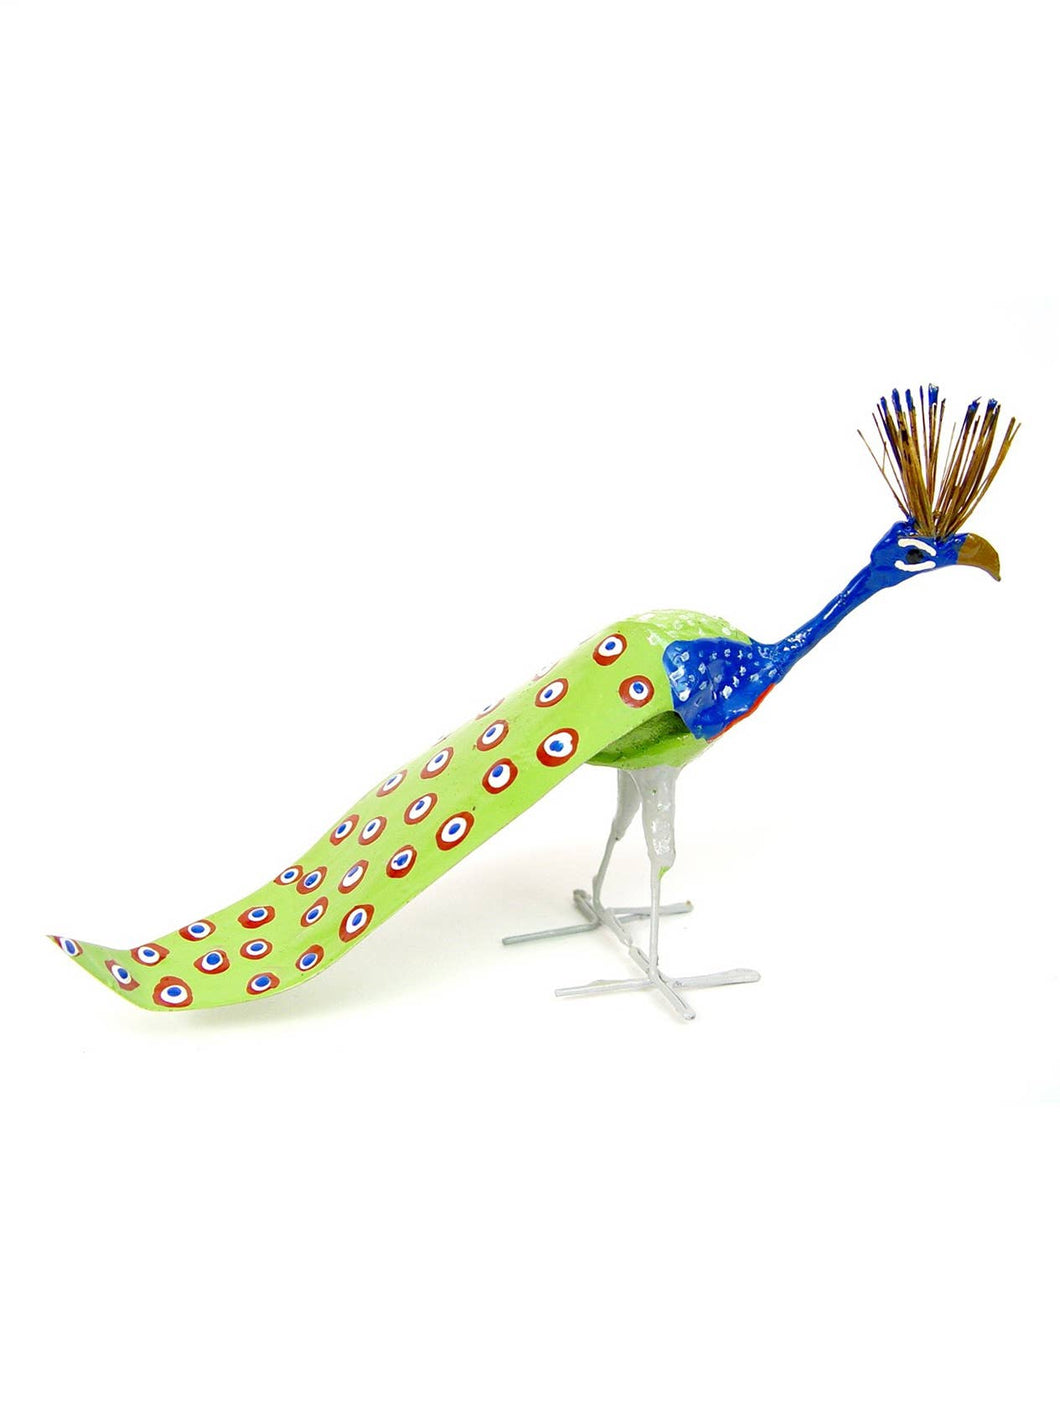 Seedpod Peacock